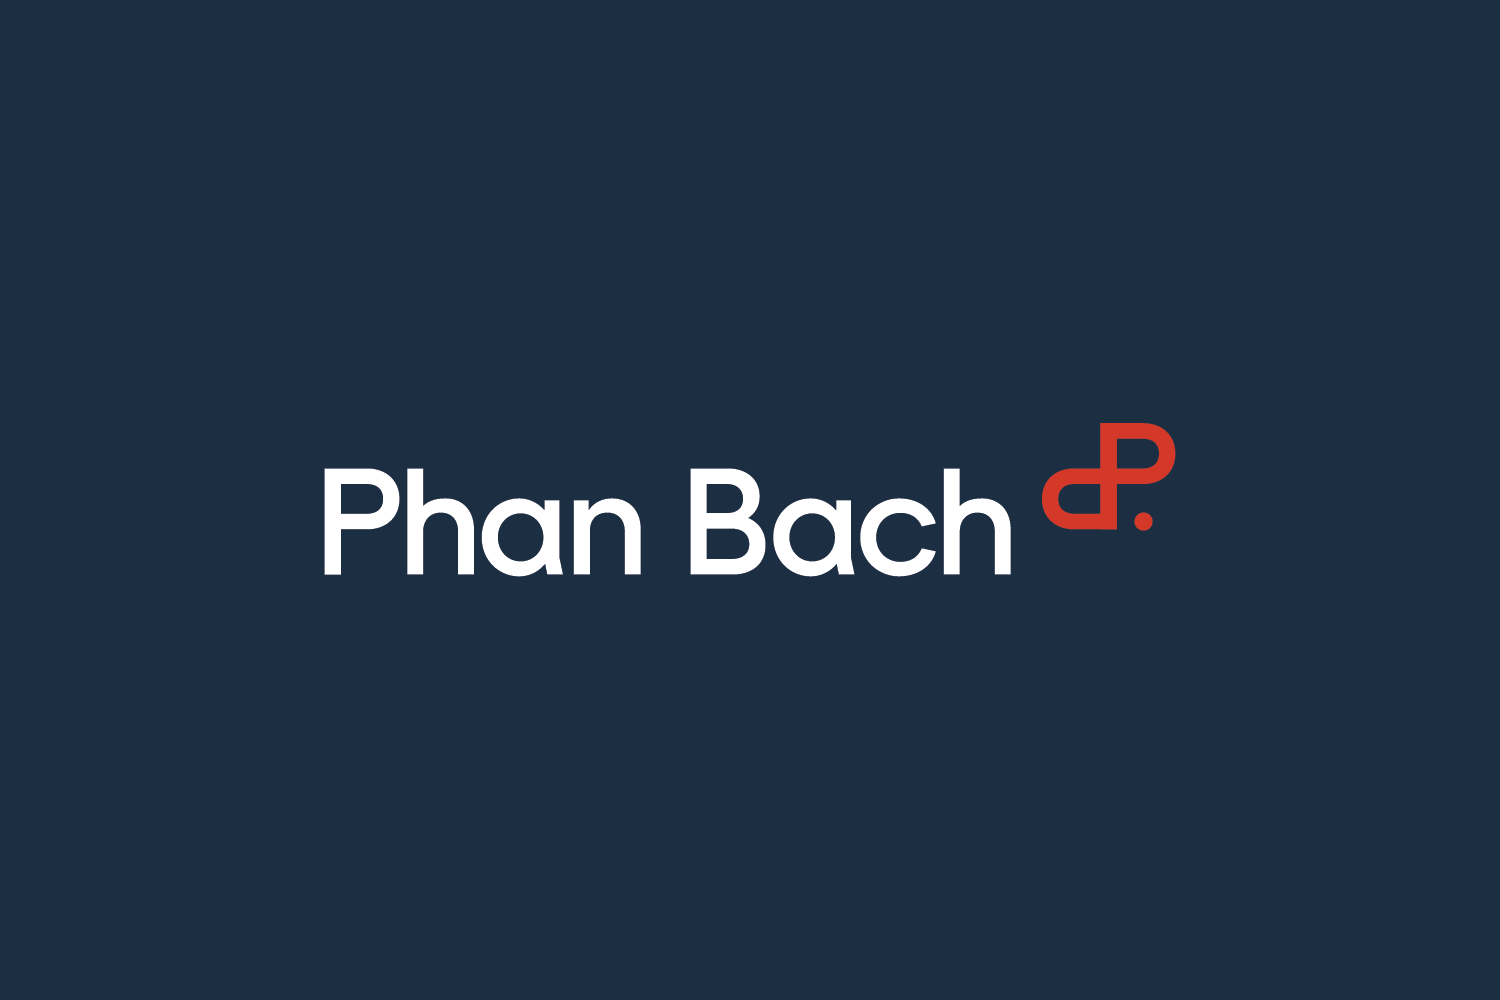 Phan Bach logo dark blue background